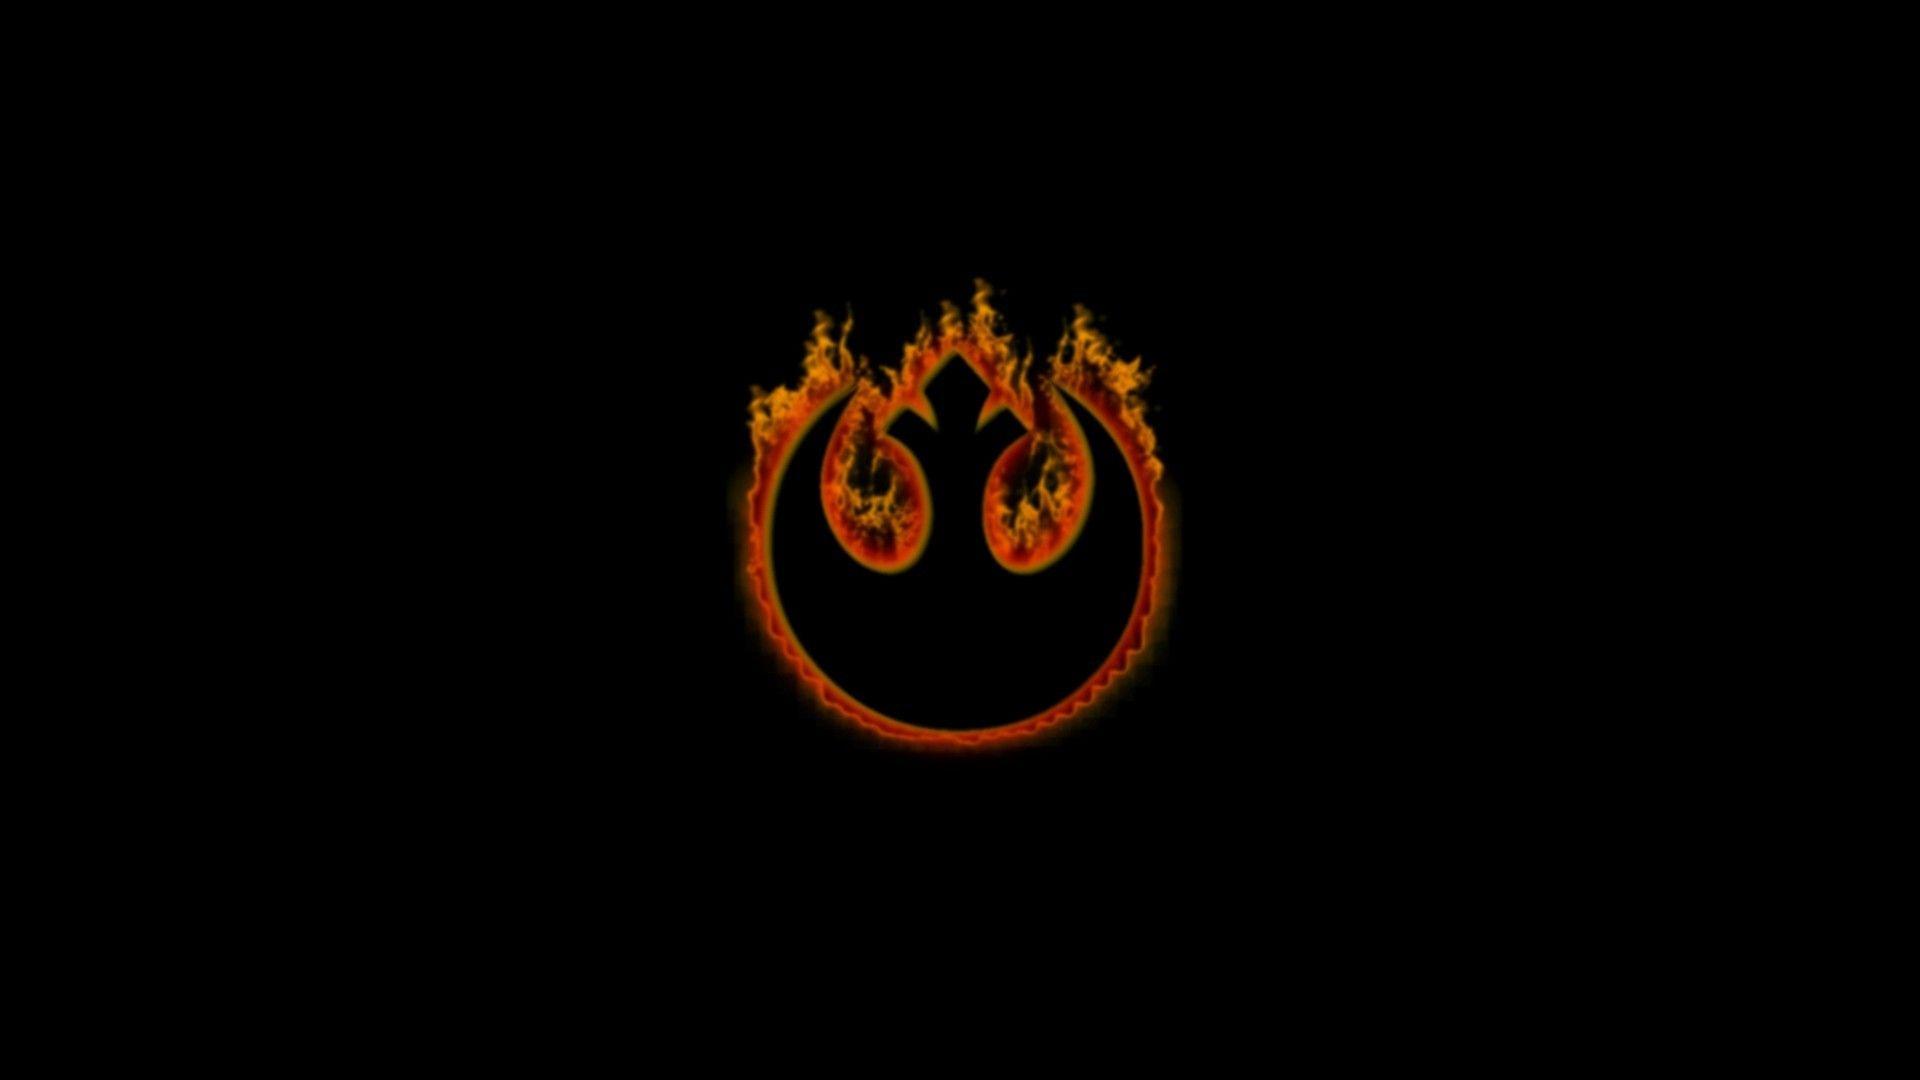 Rebel alliance logo wallpaper. PC